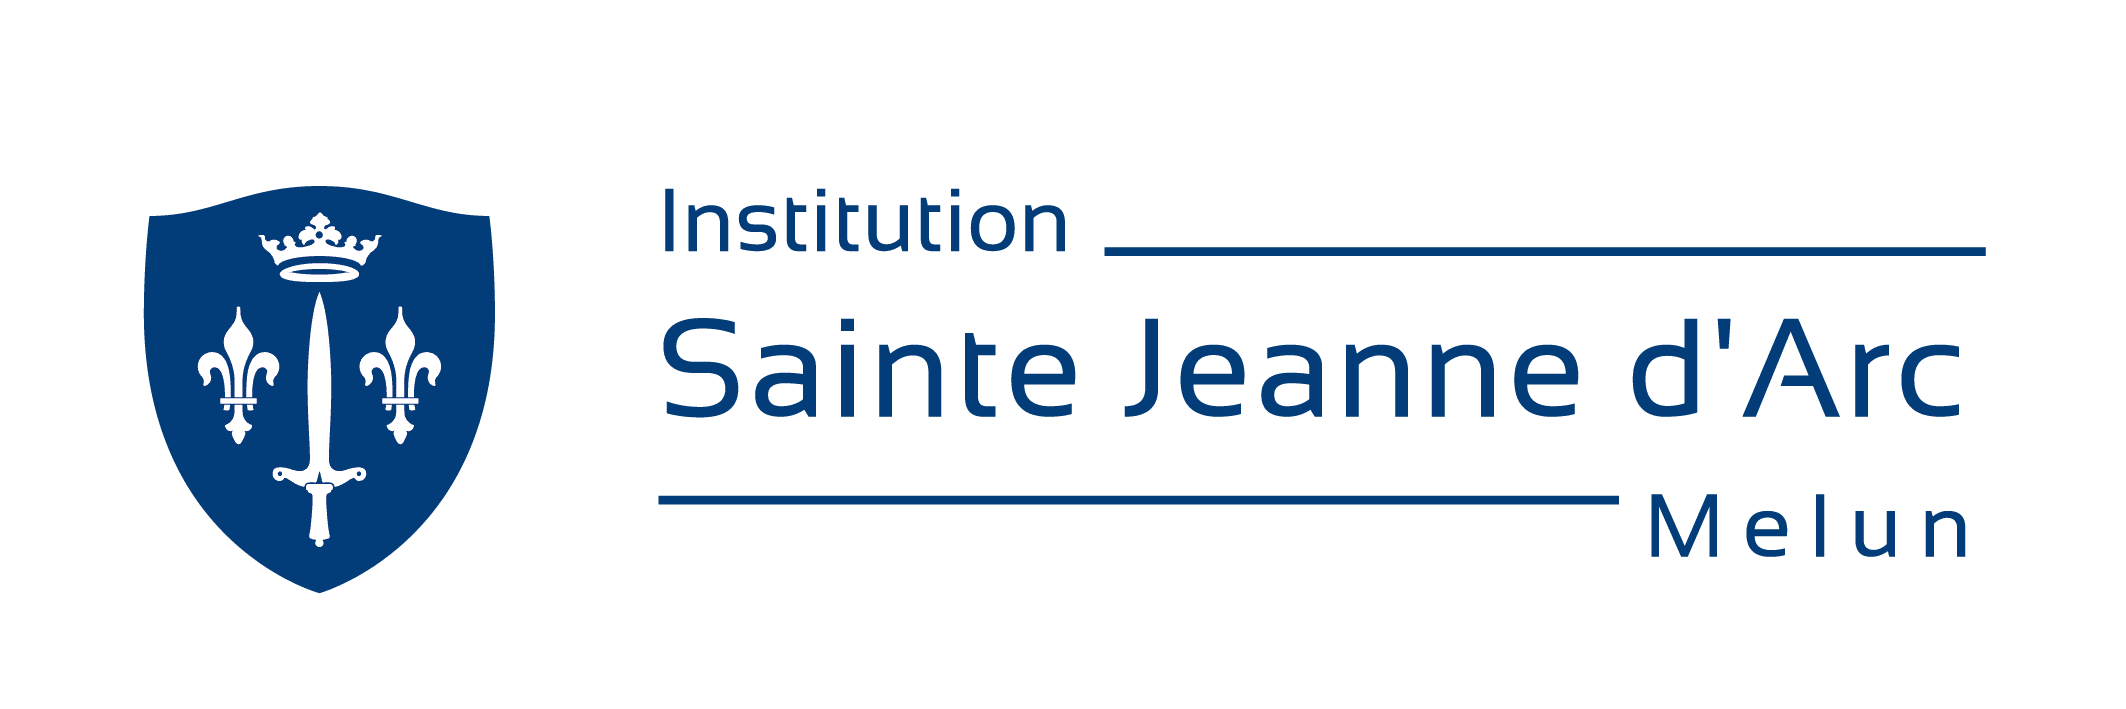 logo Institution Sainte Jeanne d'Arc